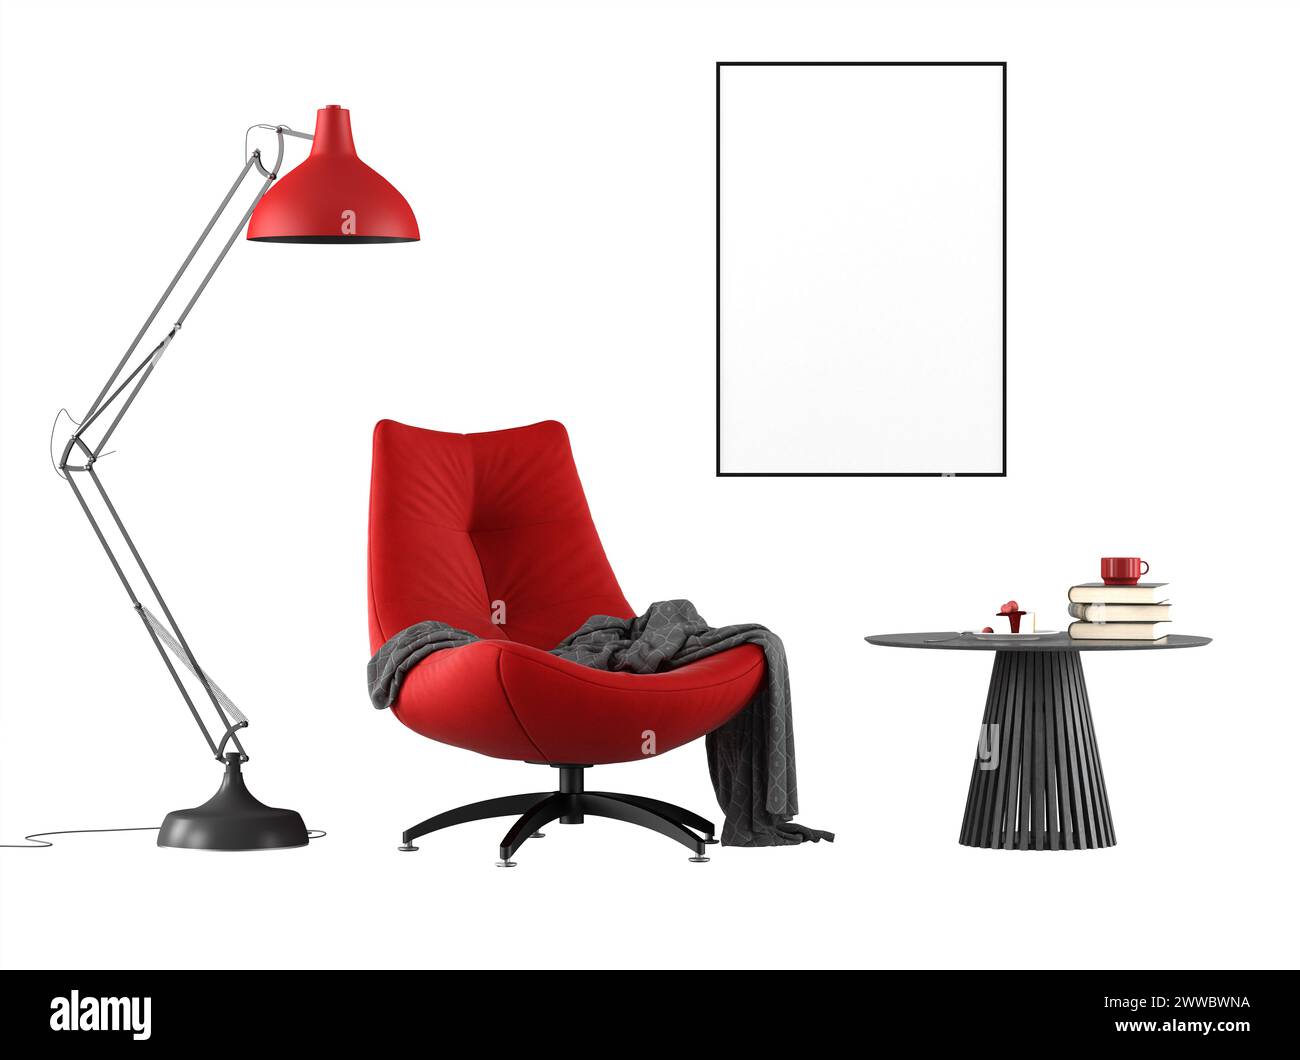 Esquina de lectura con lámpara de pie de sillón rojo y mesa auxiliar aislada sobre fondo blanco - representación 3D. Foto de stock